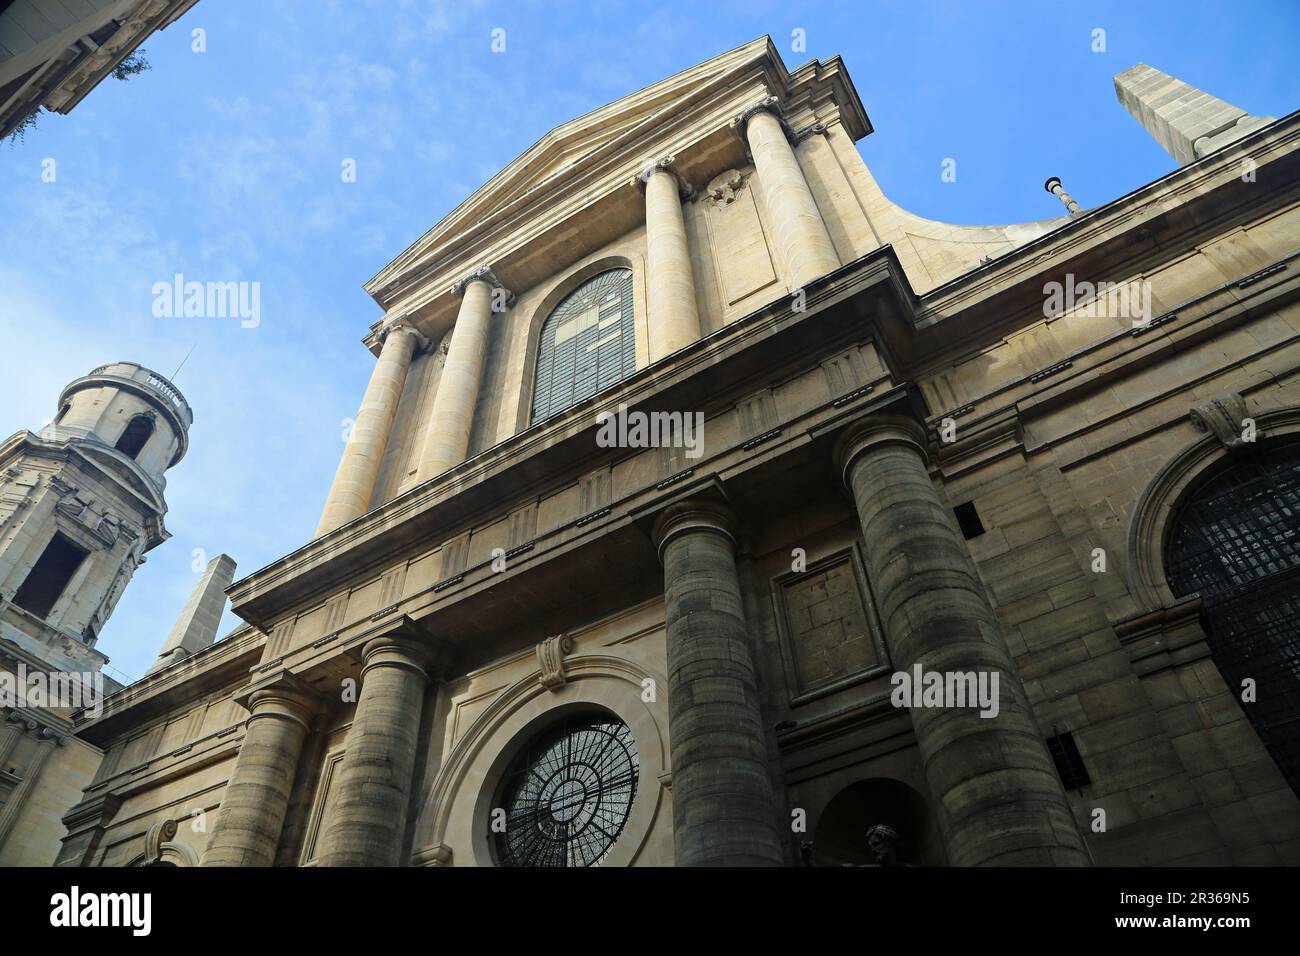 Street view at Saint-Sulpice church - Paris, France Stock Photo